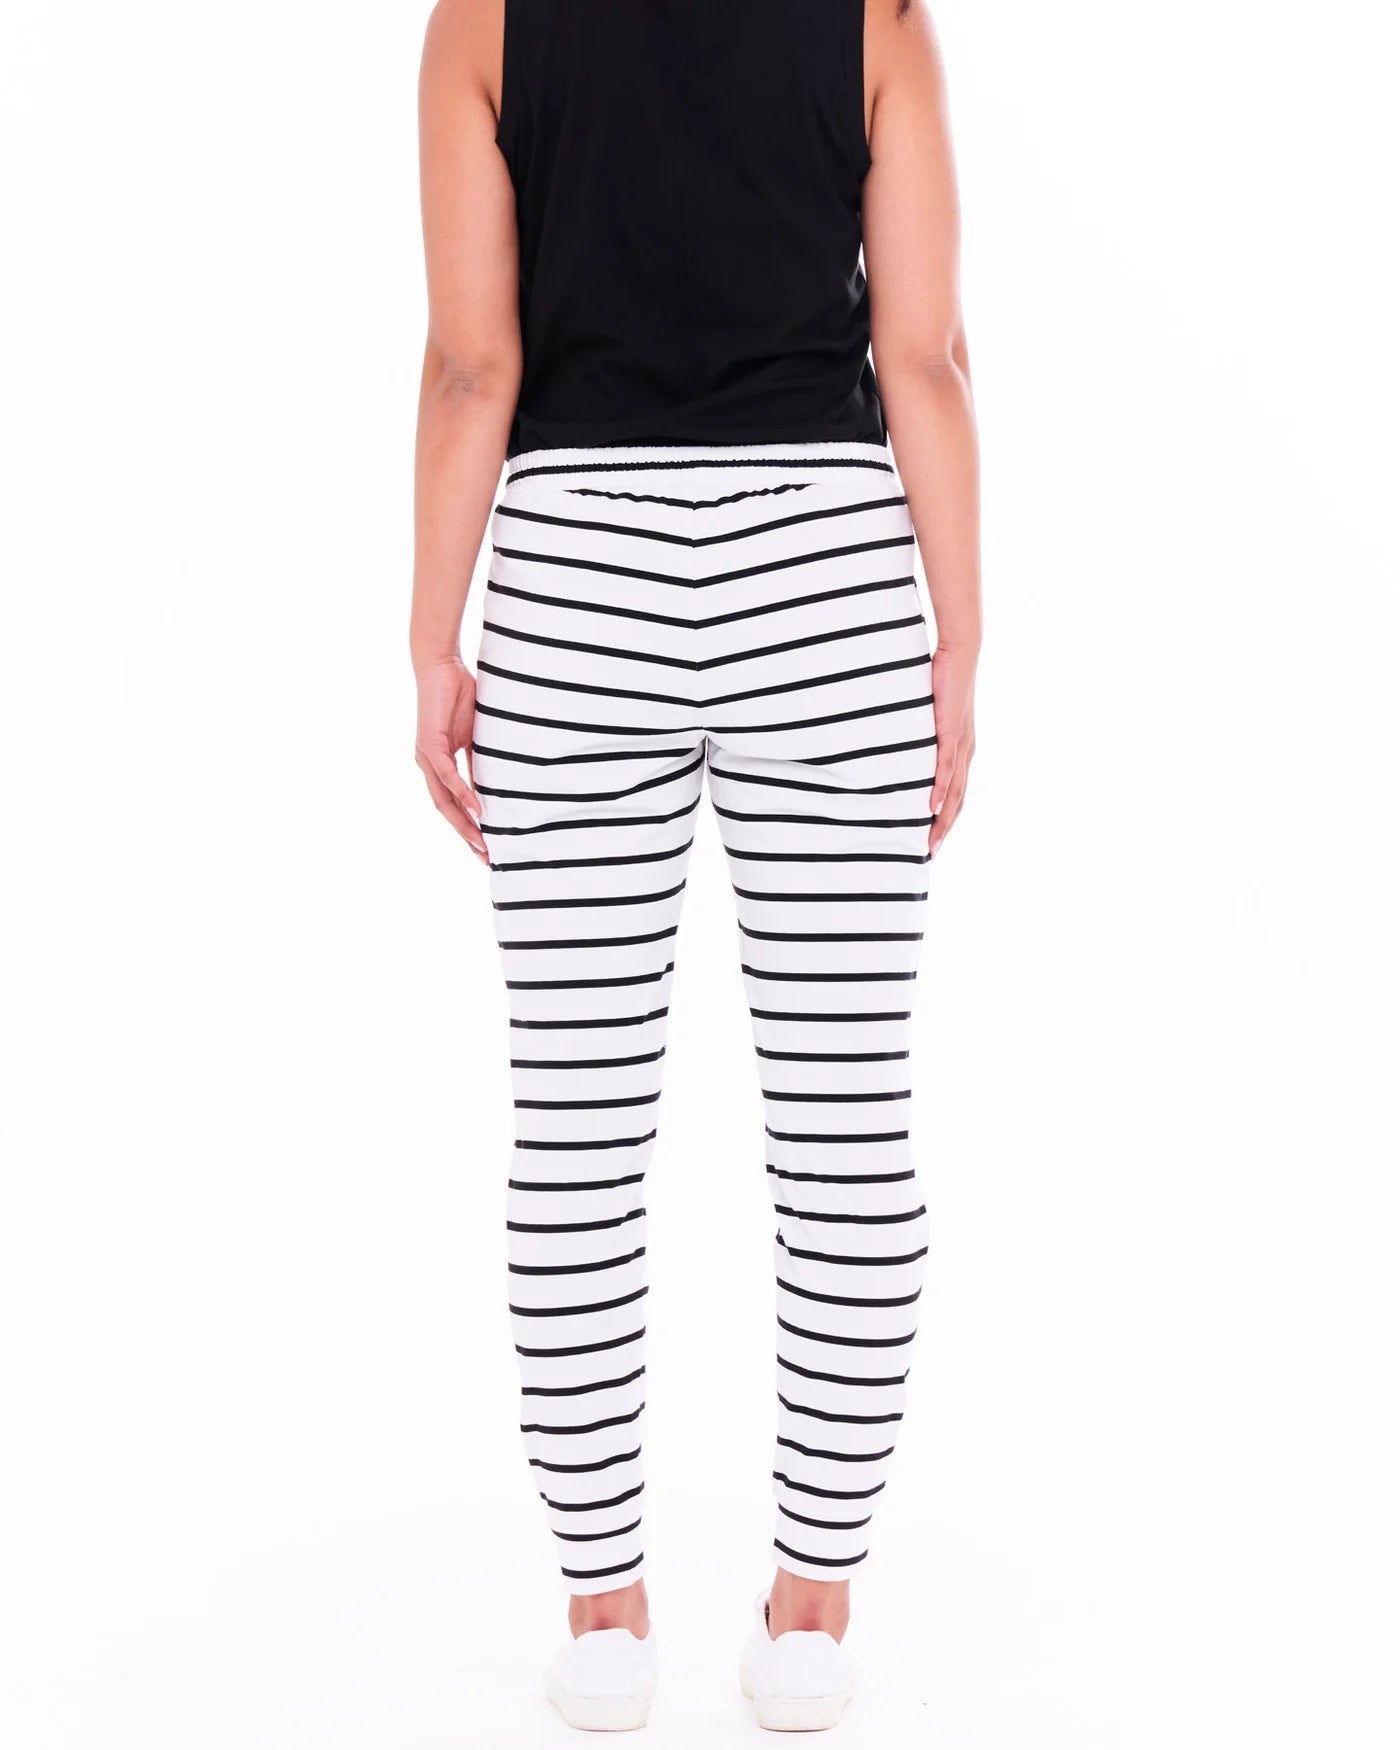 BETTY BASICS  Heidi Pant - White/Black Stripe